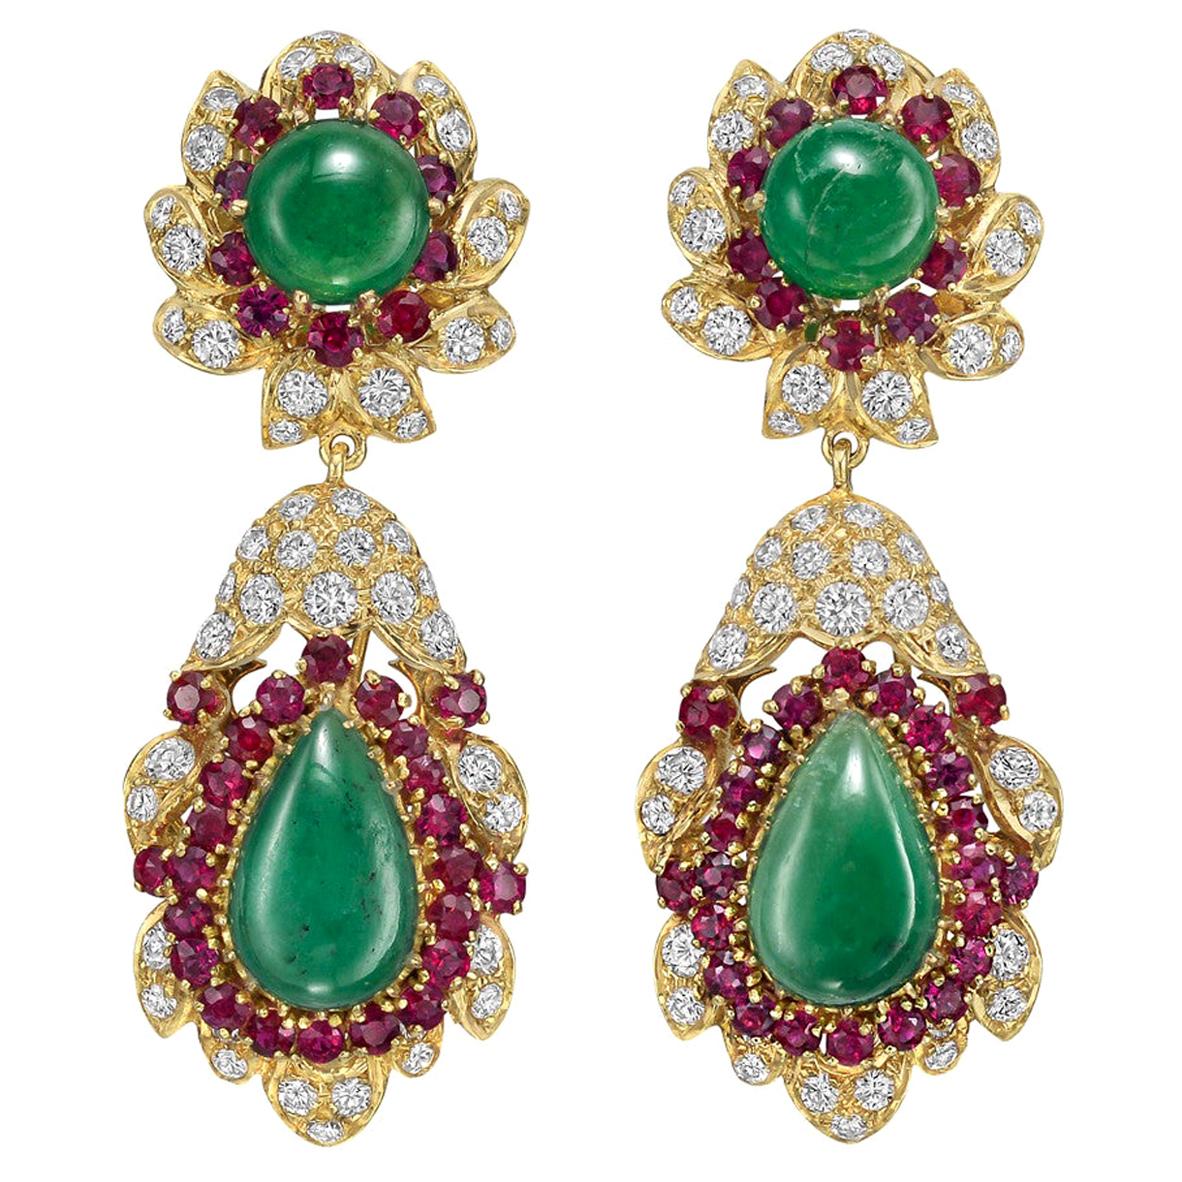 Emerald, Ruby, Diamond and Jade Pendant Earrings